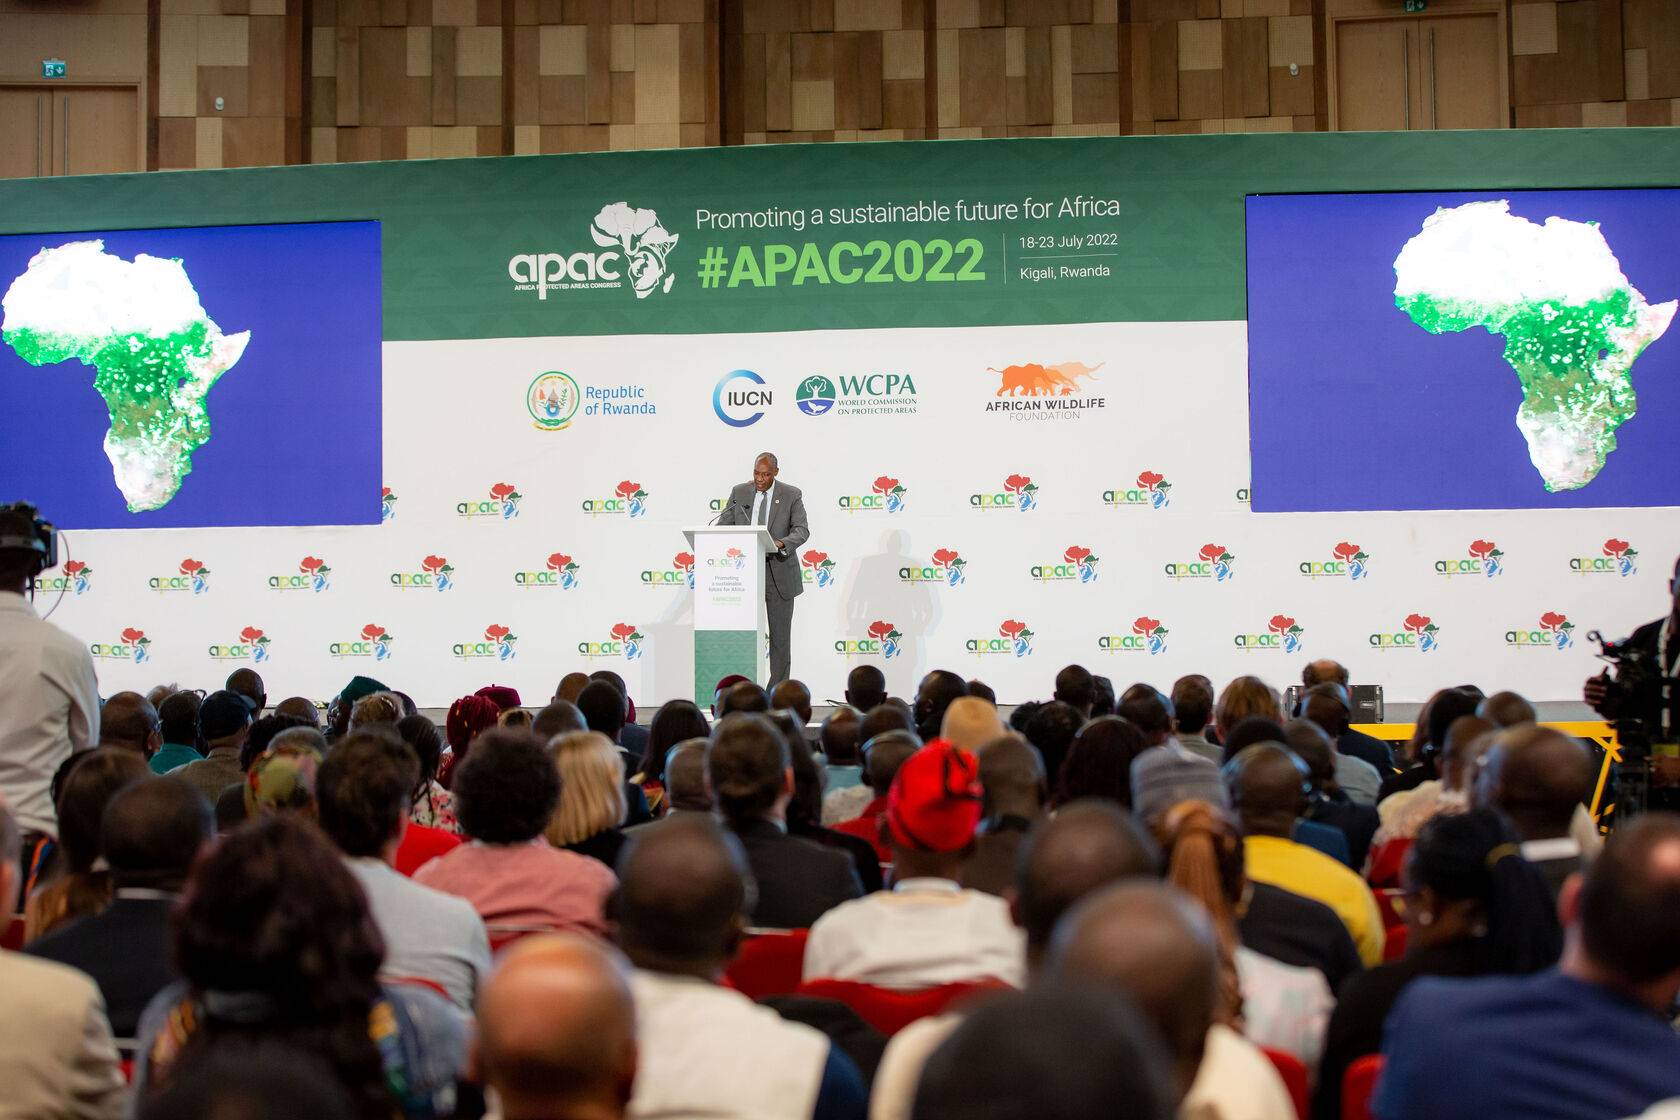 Kaddu Sebunya, CEO of African Wildlife Foundation speaking at the opening of the APAC. Image courtesy of APAC/AWF/IUCN.